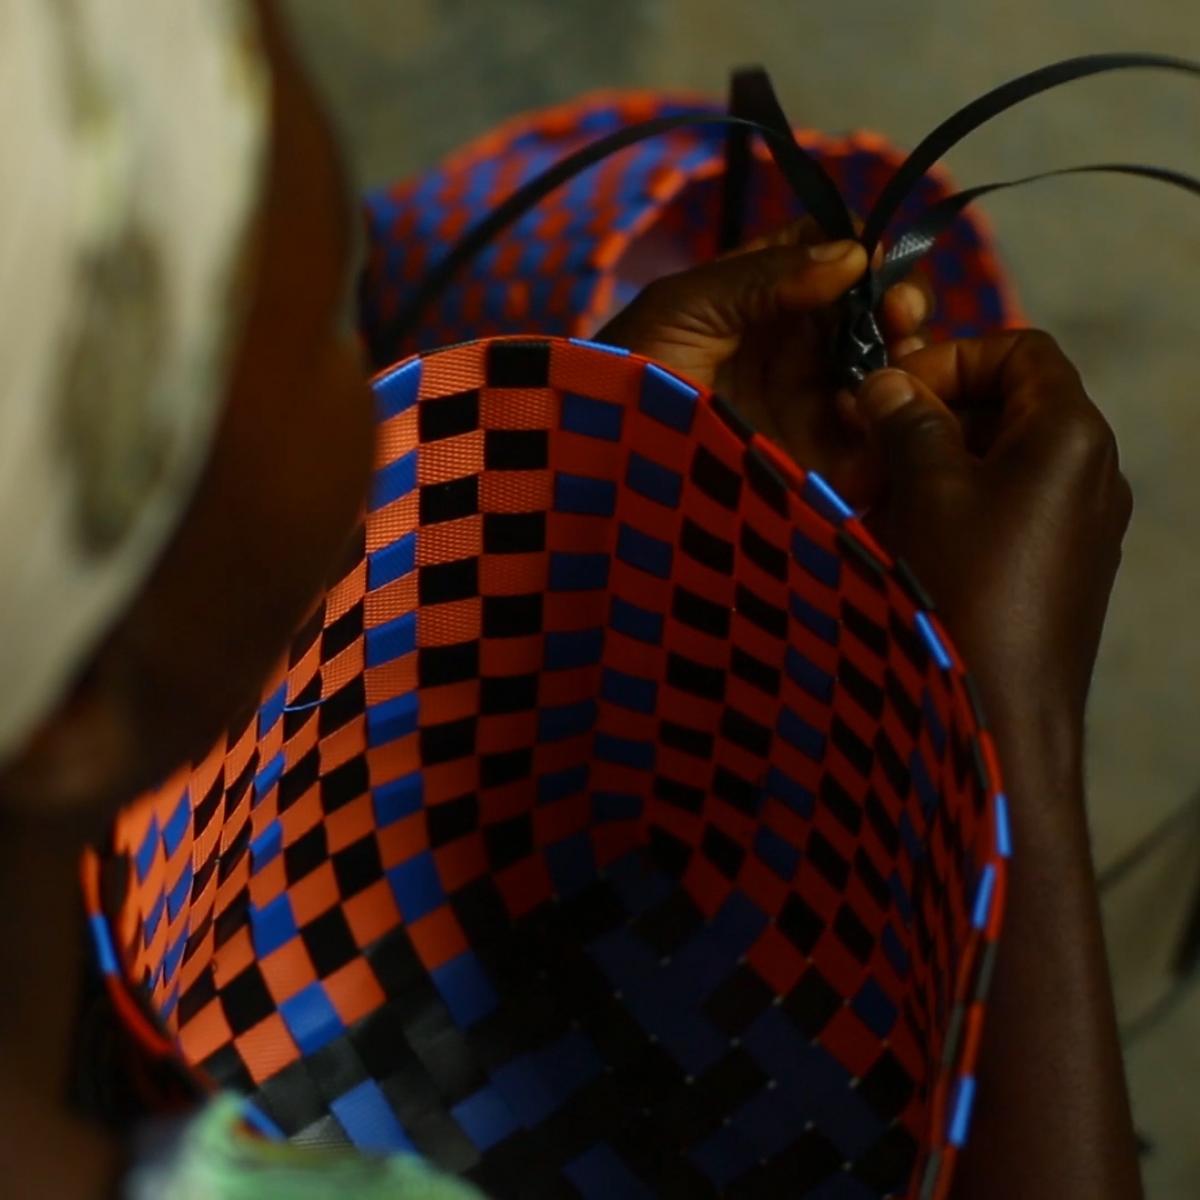 Closeup of woman weaving a colorful basket.